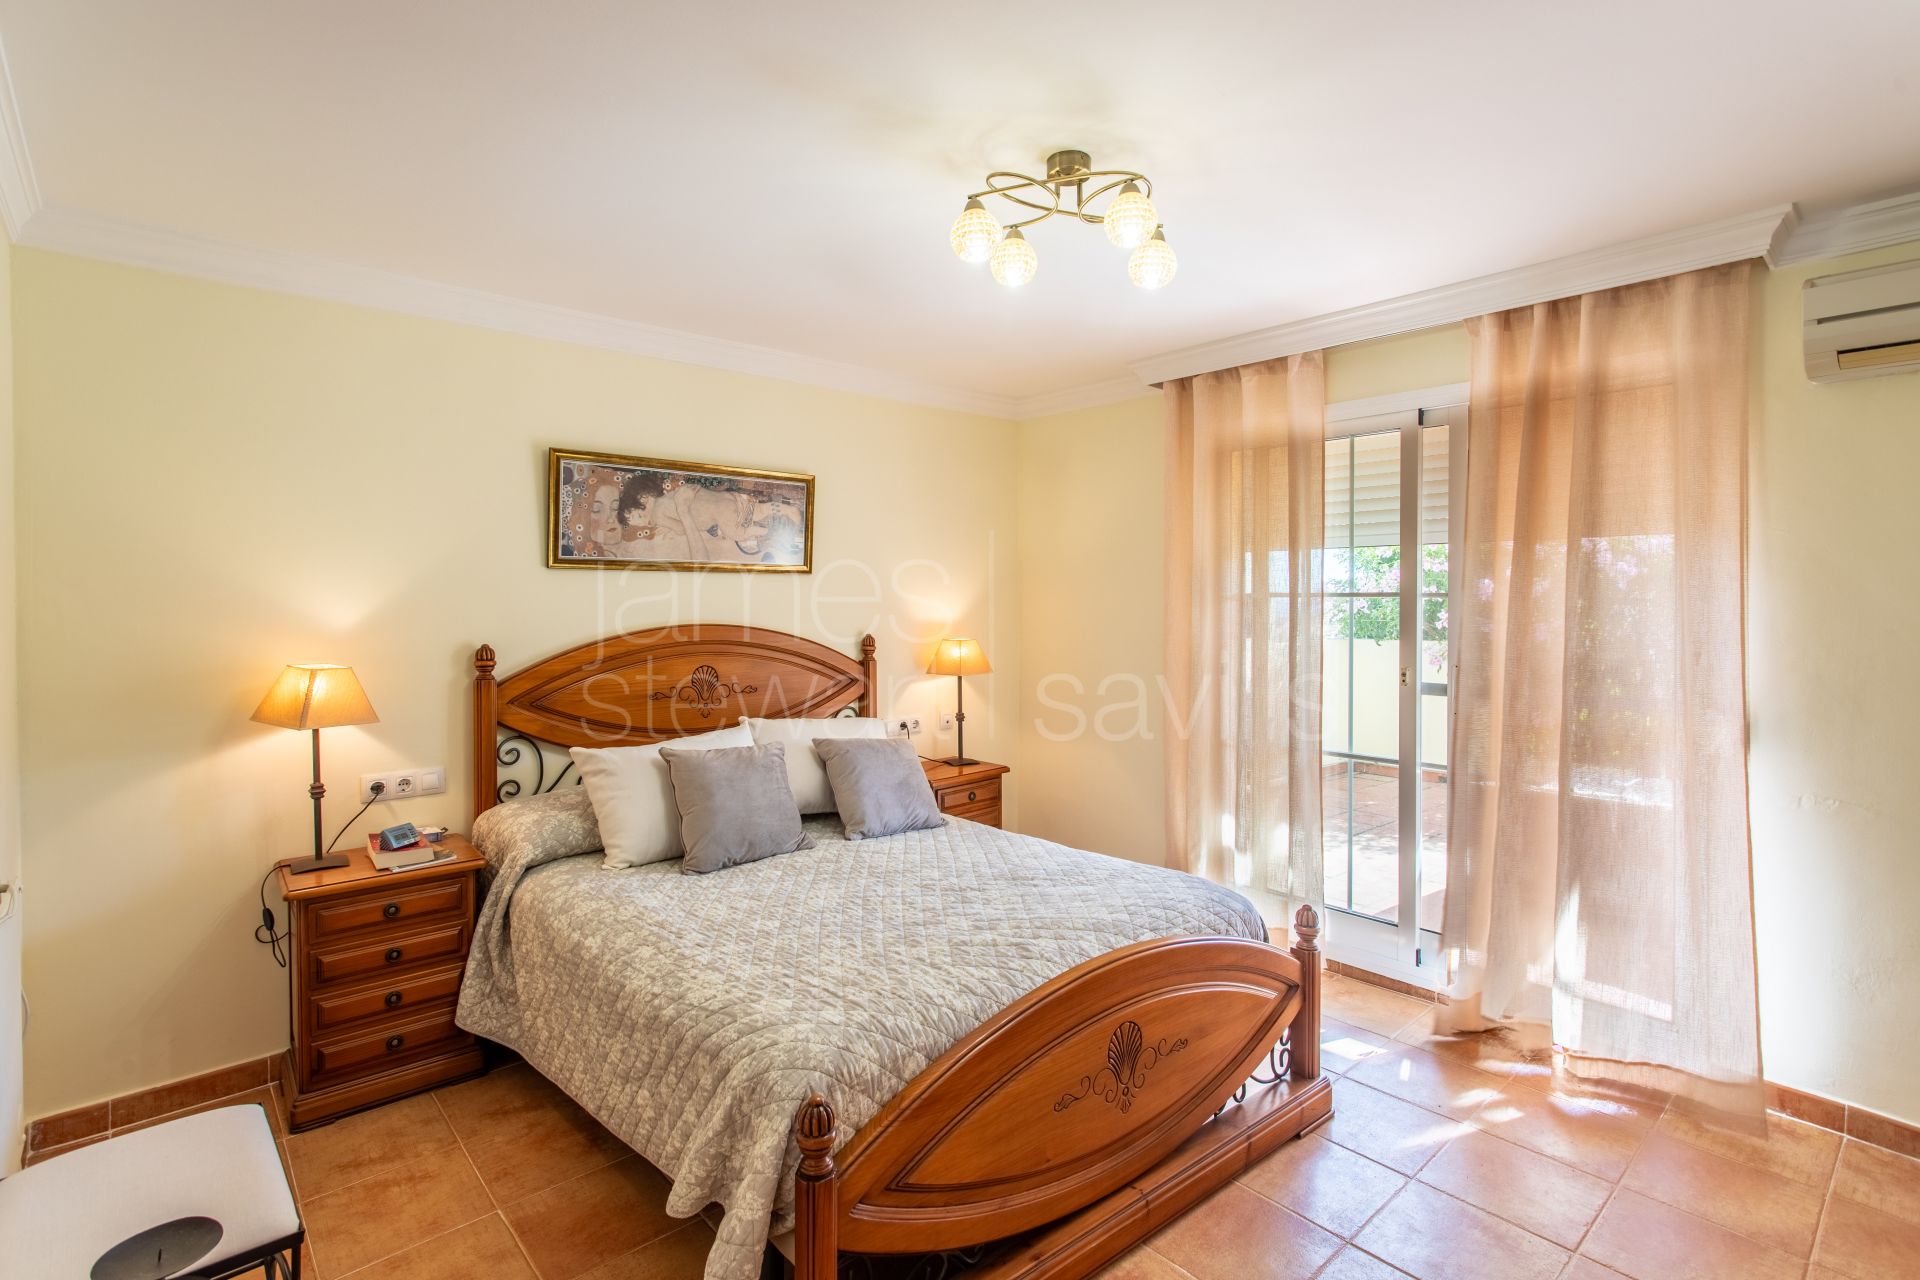 5 Bedroom semi-detached house in La Alcaidesa with exceptional sea views